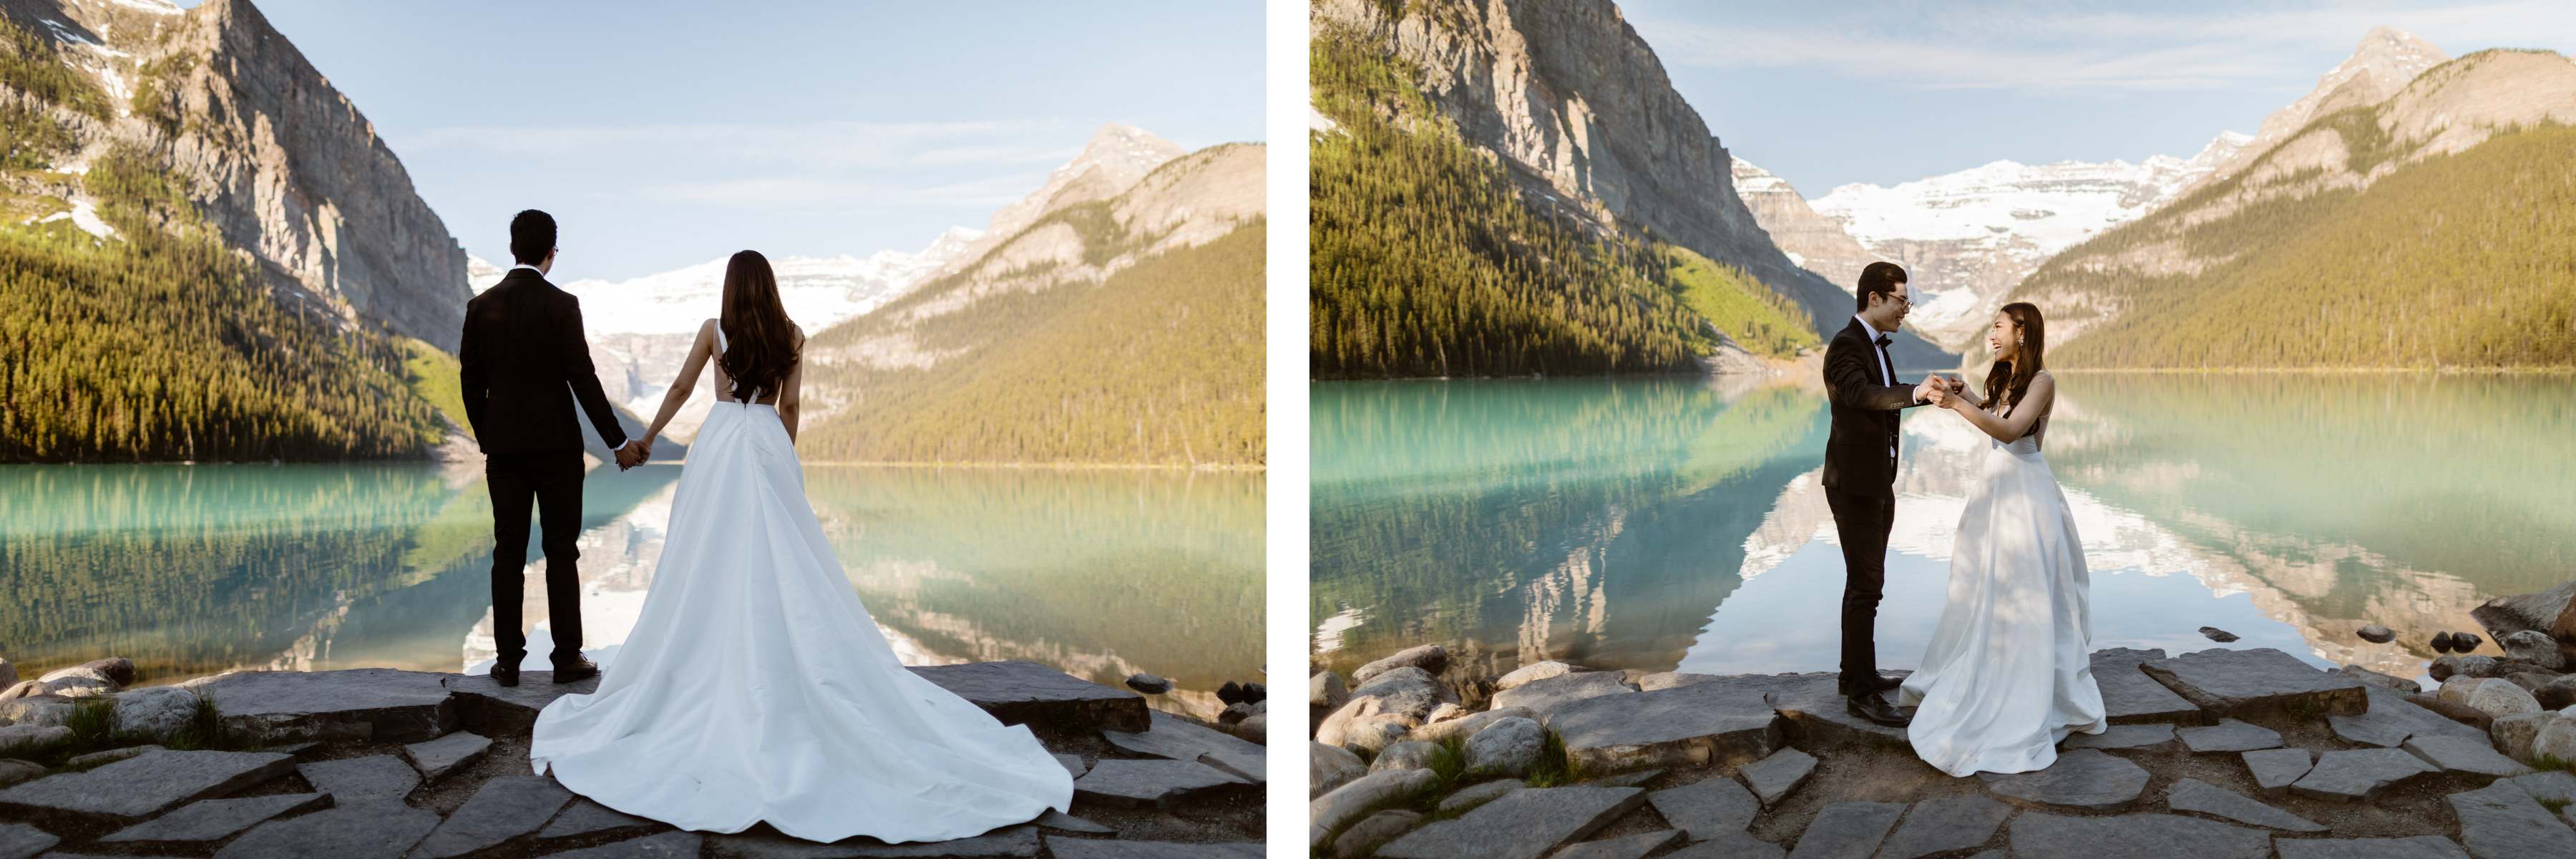 Banff Pre Wedding Photography at Moraine Lake - Photo 42